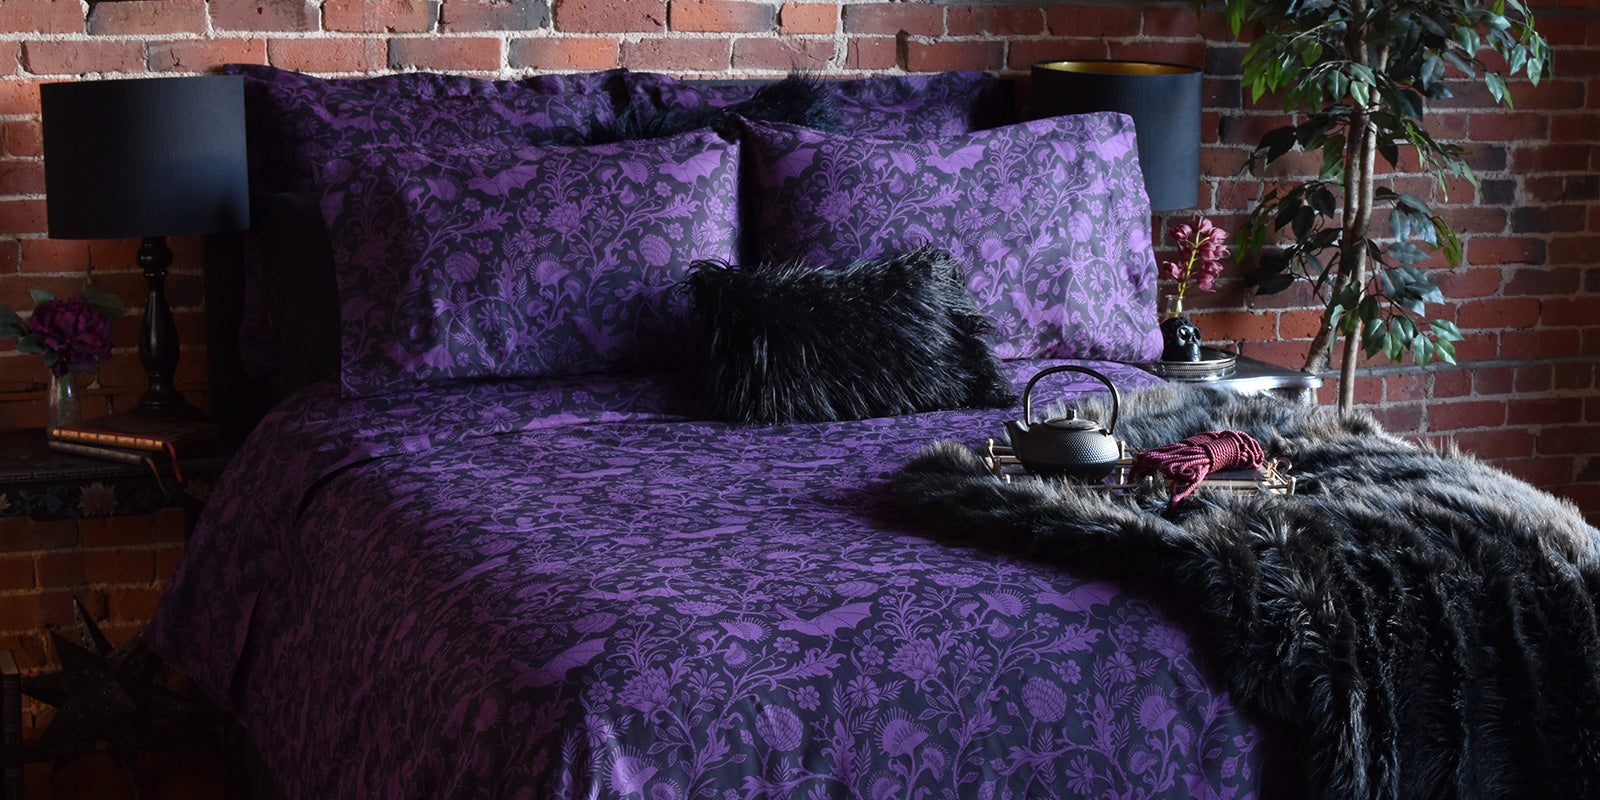 Purple Bats Bedding and Gothic Decor